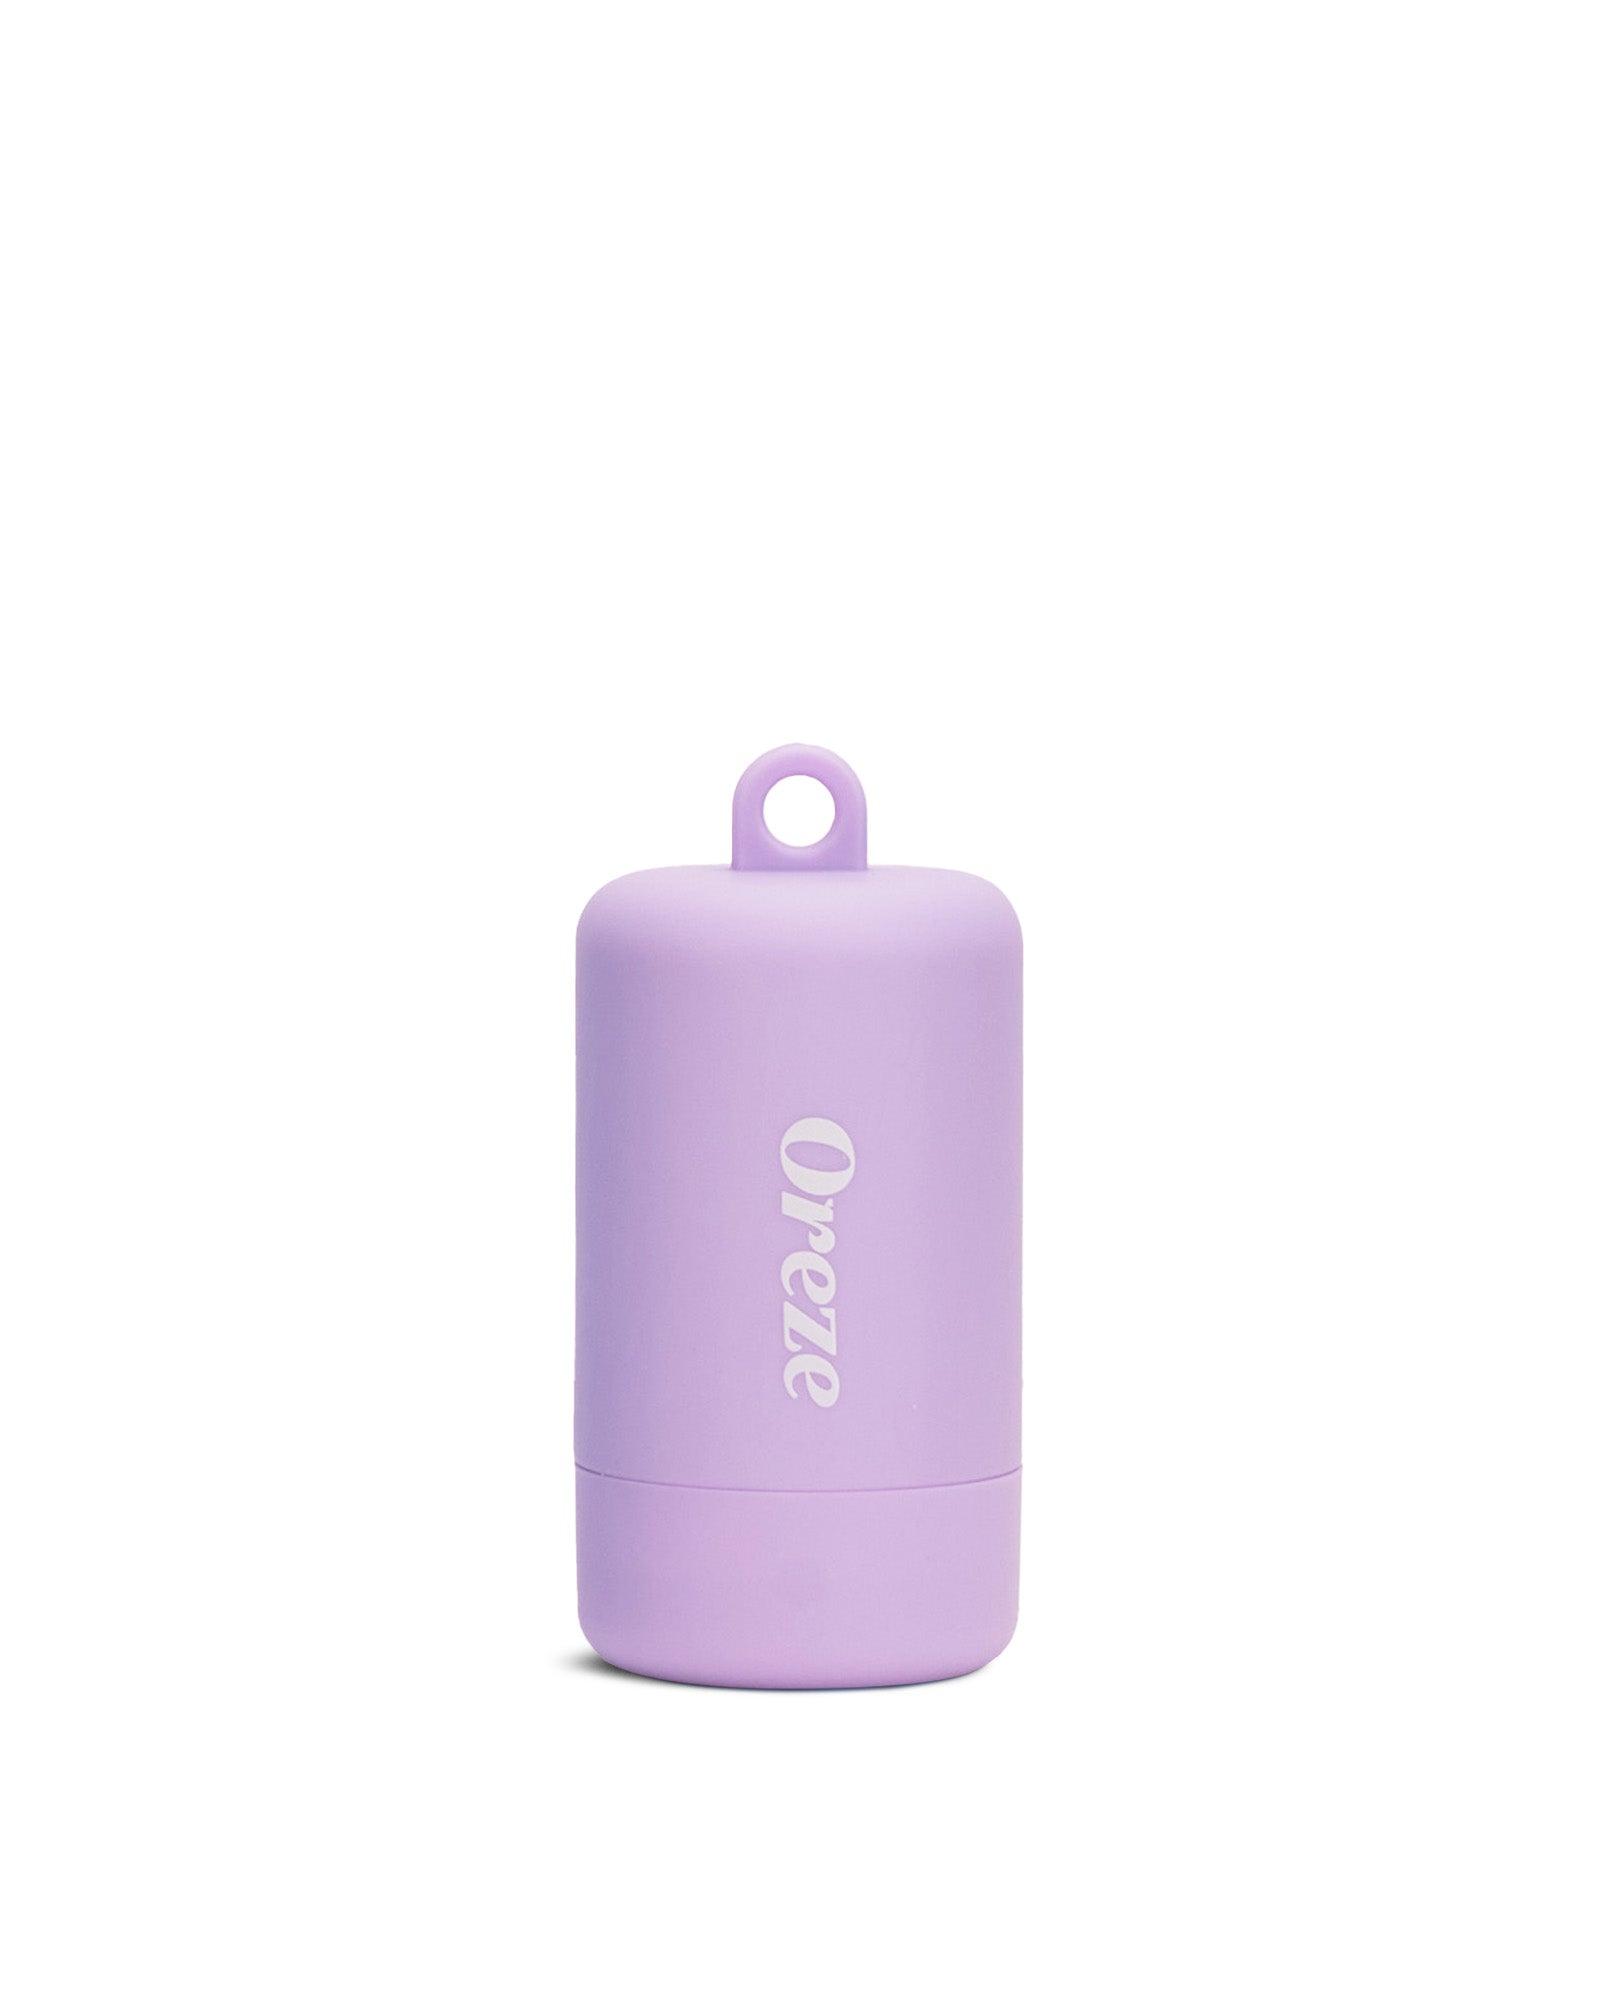 Oreze poop bag carrier in lilac